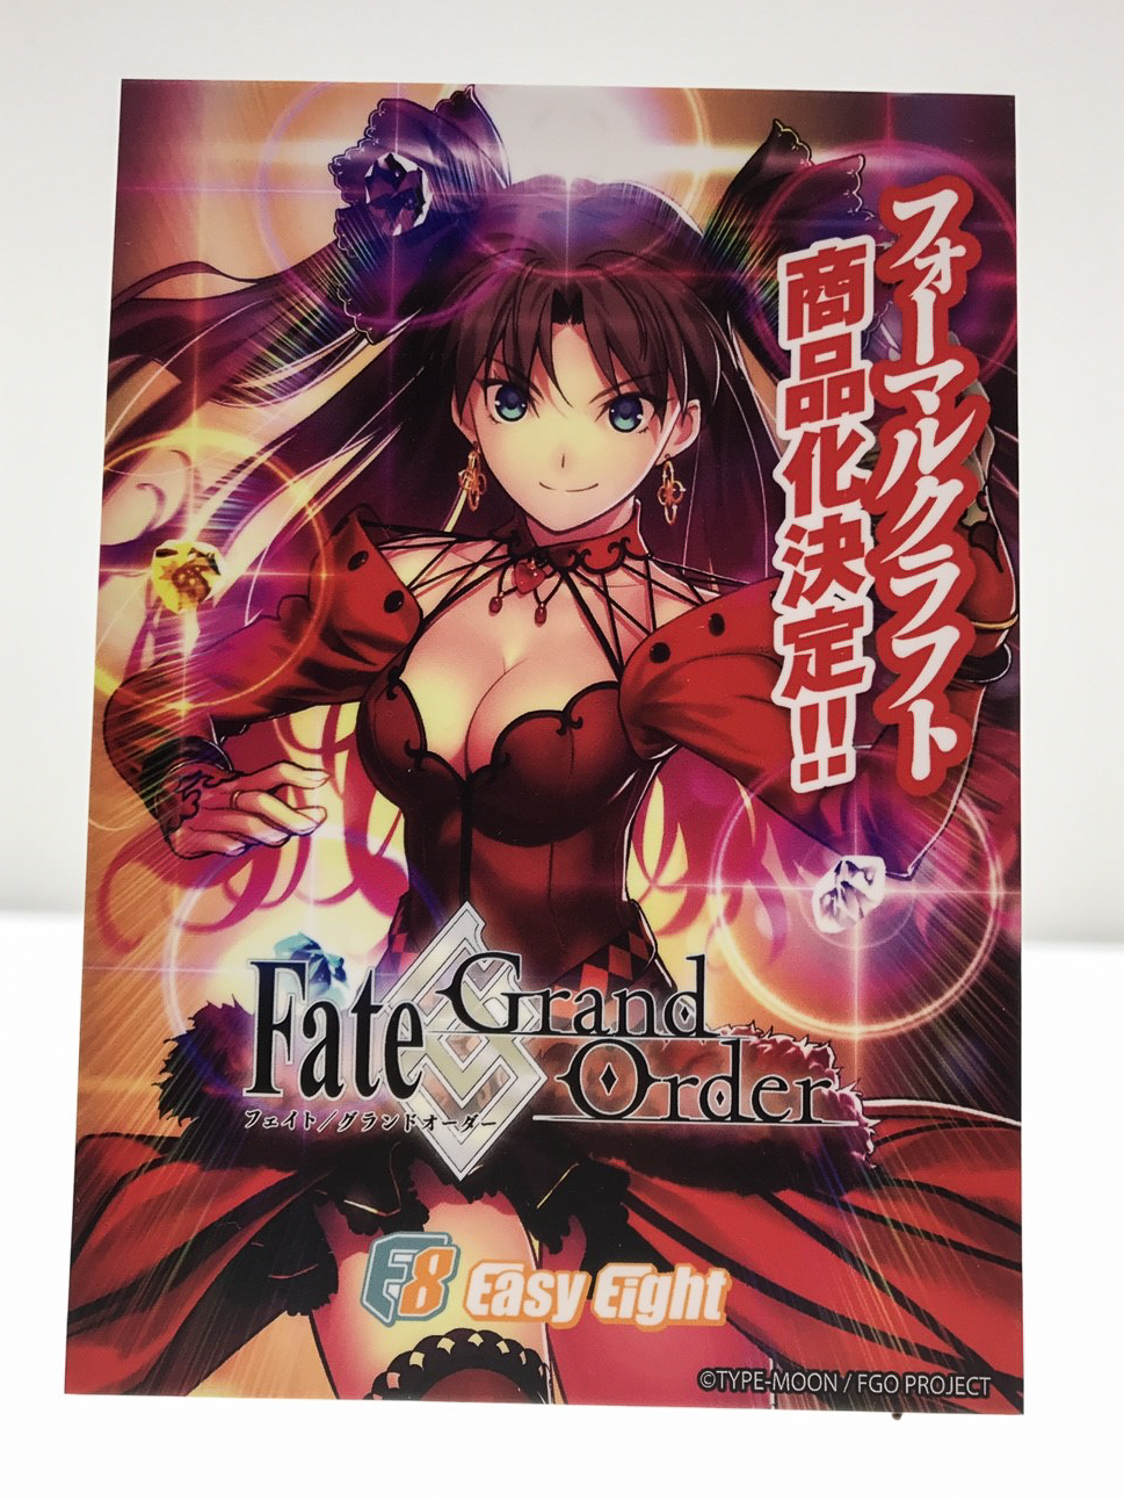 Fate Go フォーマルクラフト フィギュア 30日予約開始 イージーエイト Fig速 フィギュア プラモ 新作ホビー情報まとめ